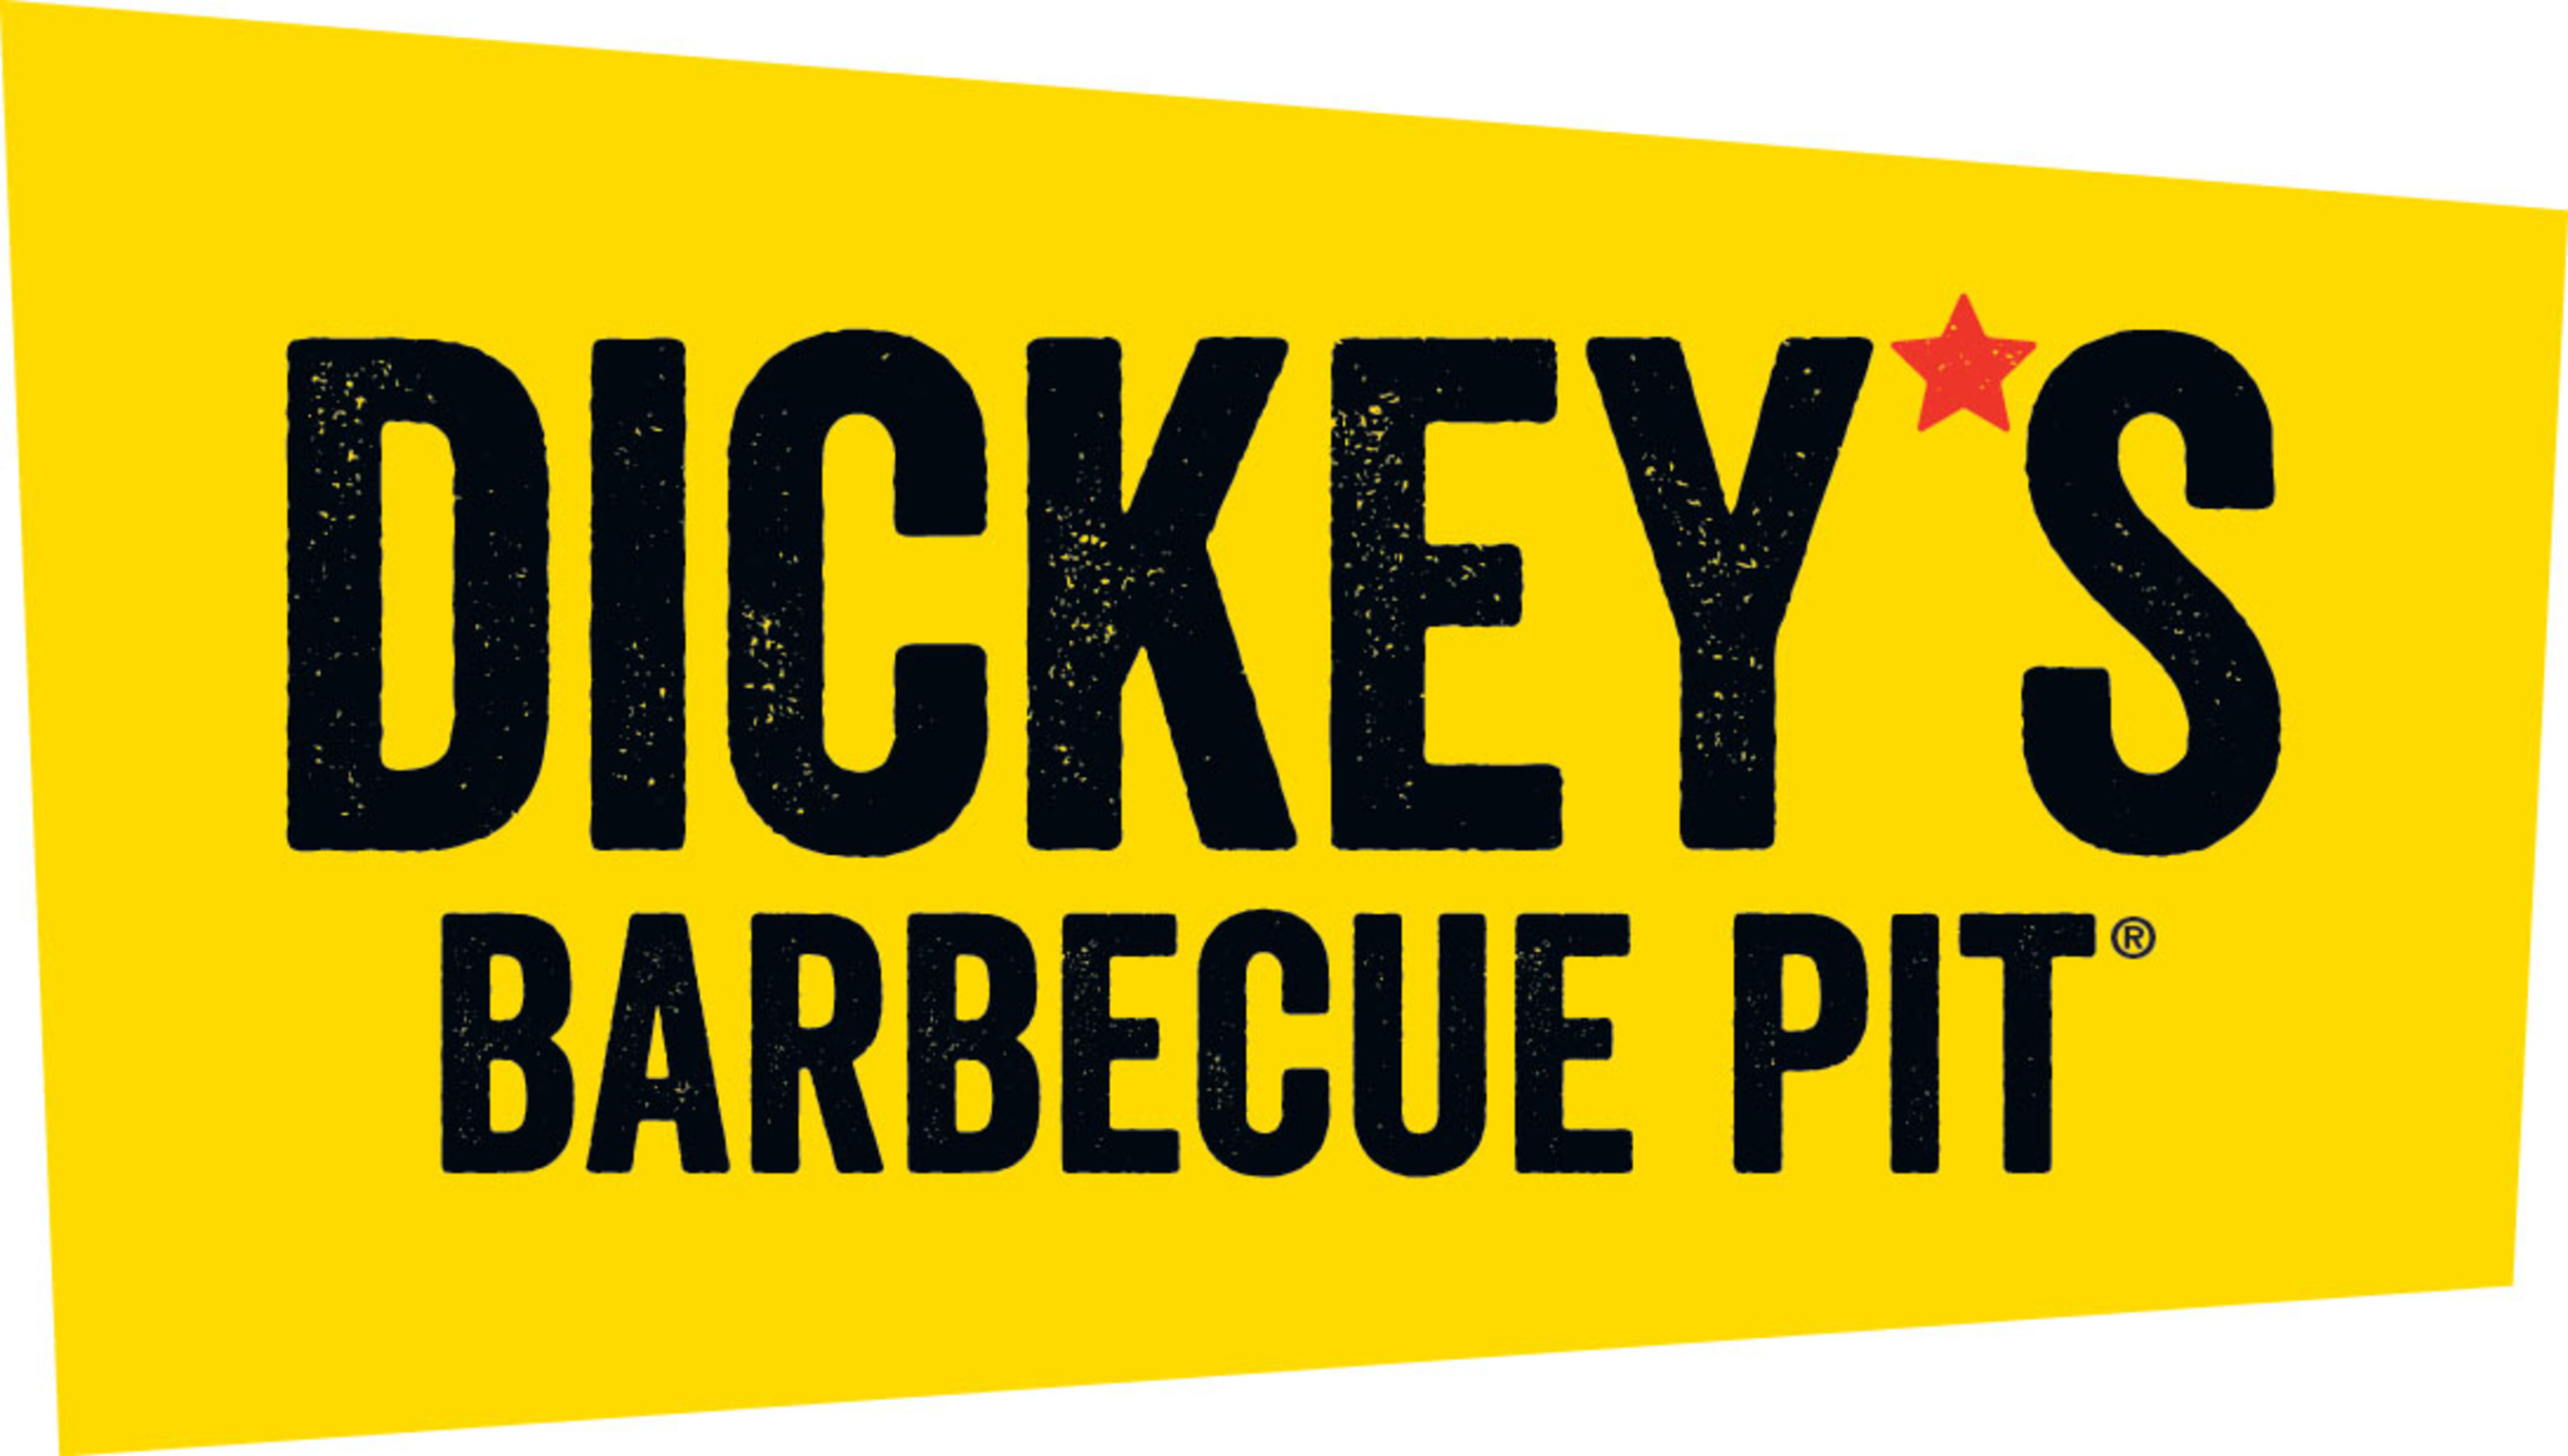 Dickey's Barbecue logo. (PRNewsFoto/Dickey's Barbecue Restaurants, Inc.) (PRNewsFoto/DICKEY'S BARBECUE___)